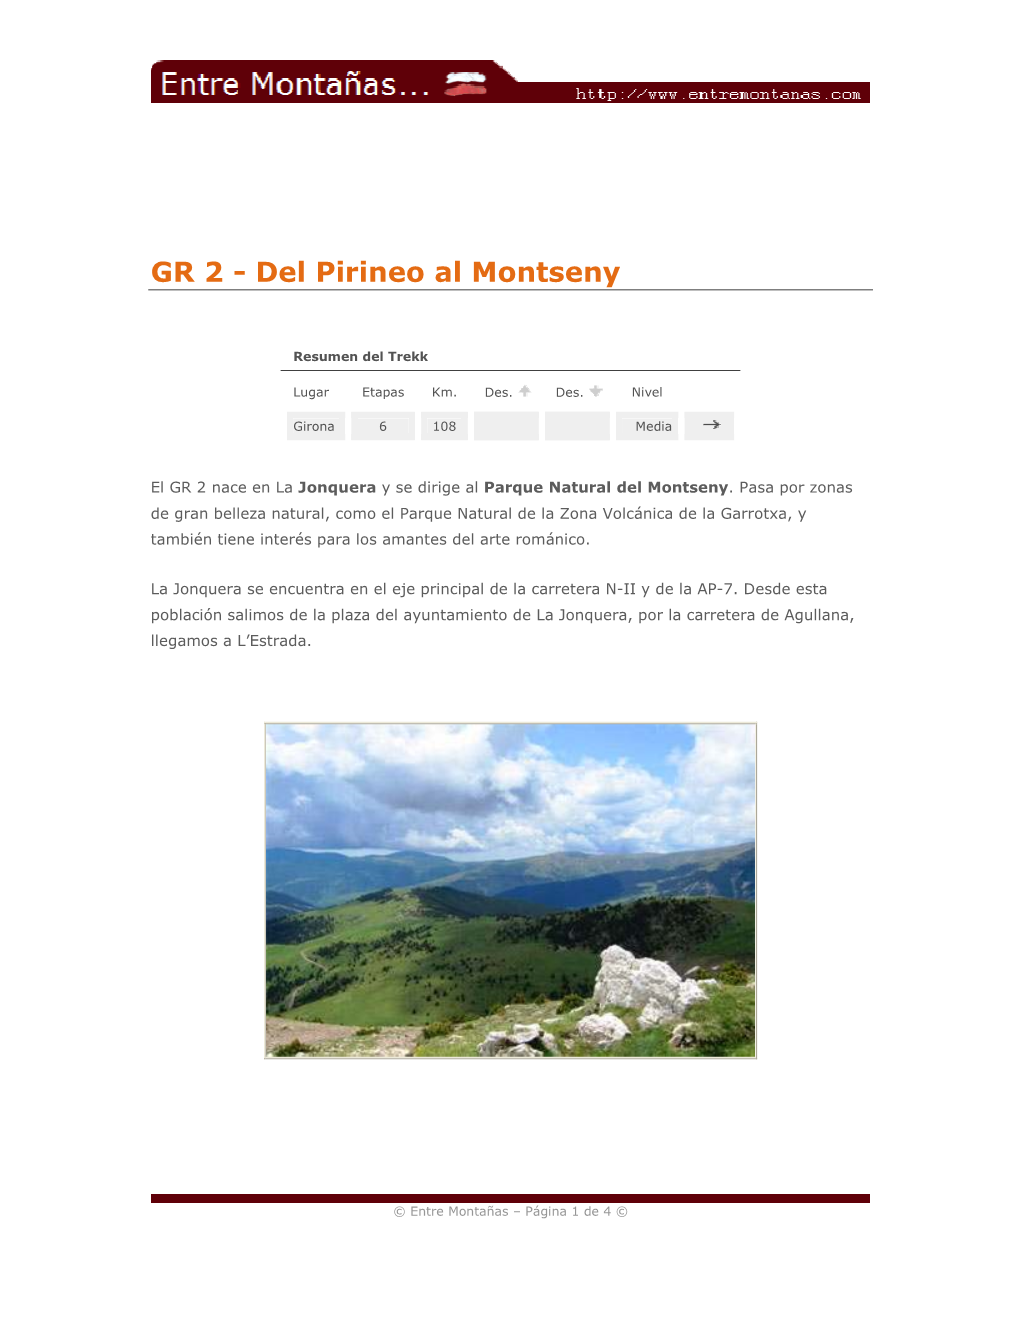 Del Pirineo Al Montseny